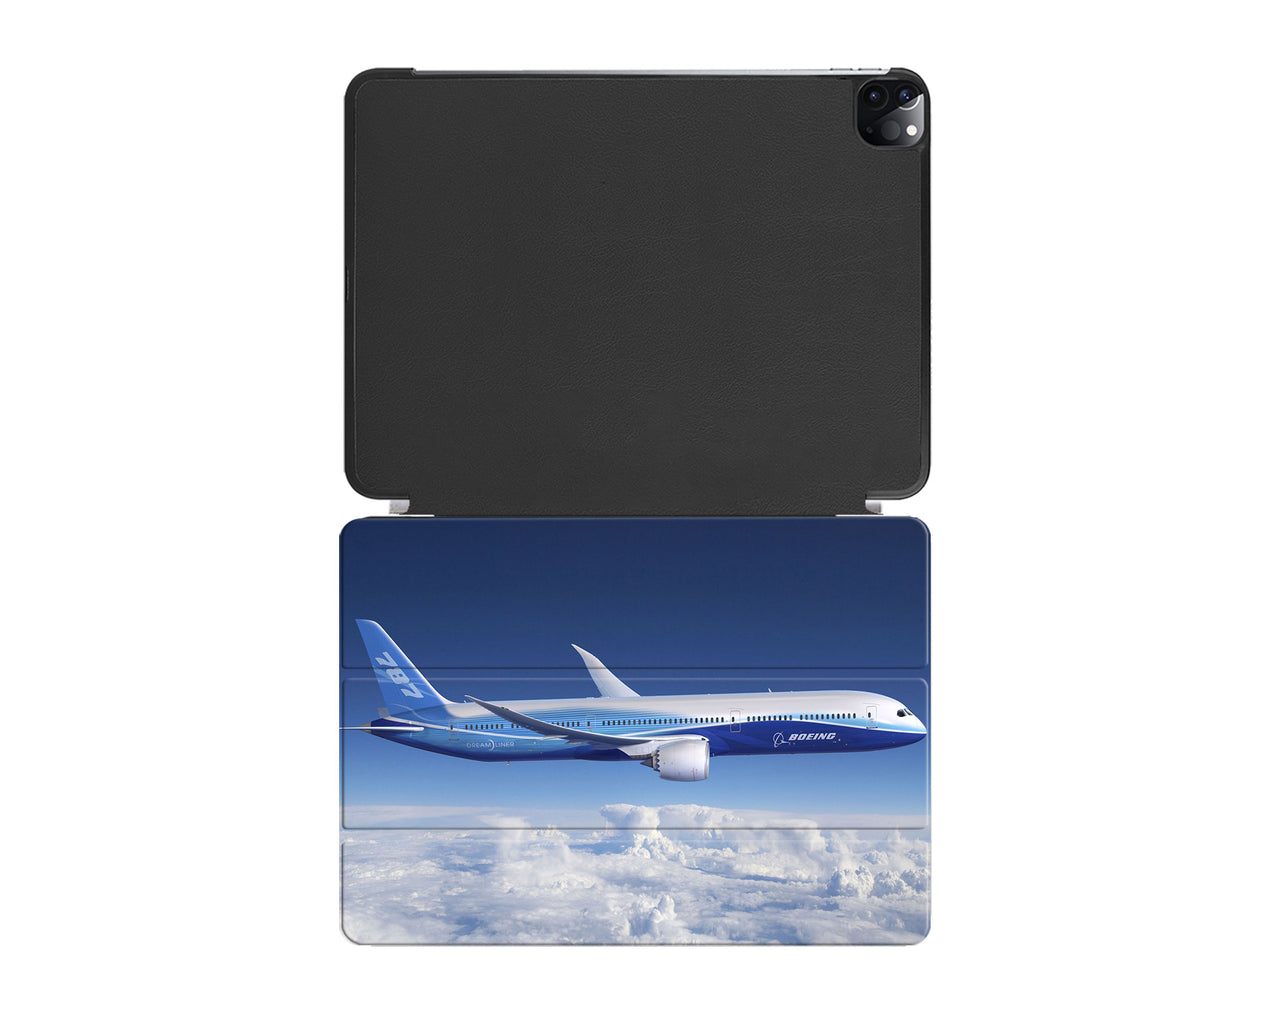 Boeing 787 Dreamliner Designed iPad Cases